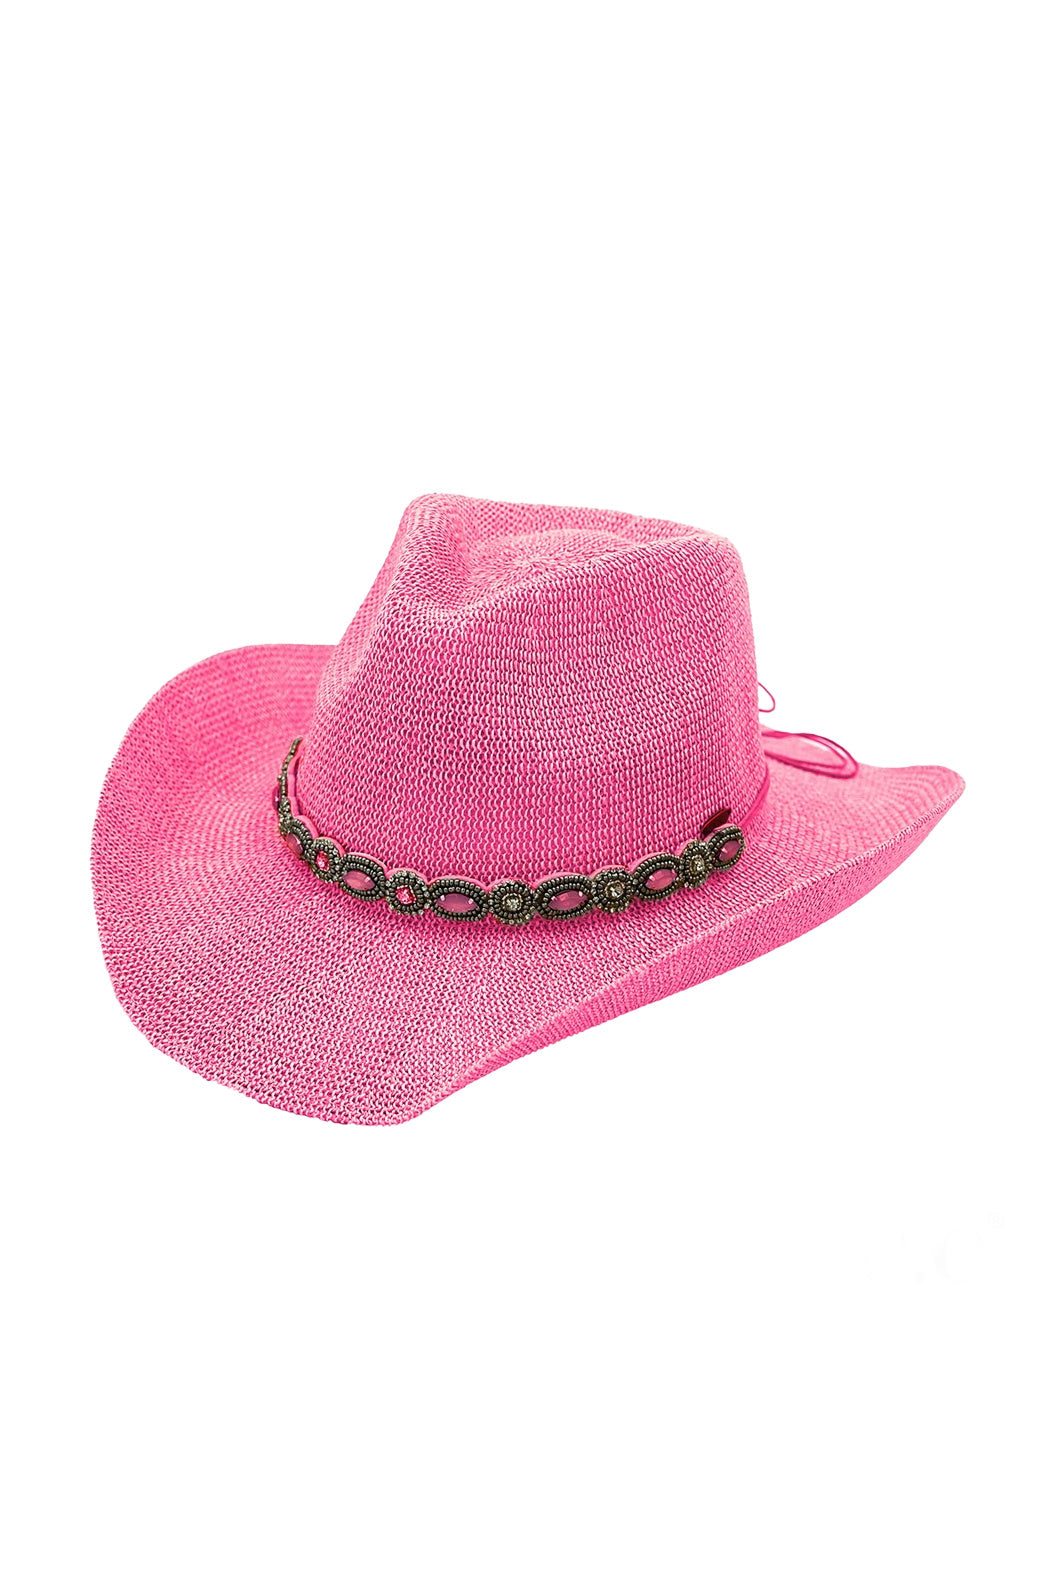 Jeweled Cowgirl Straw Hat